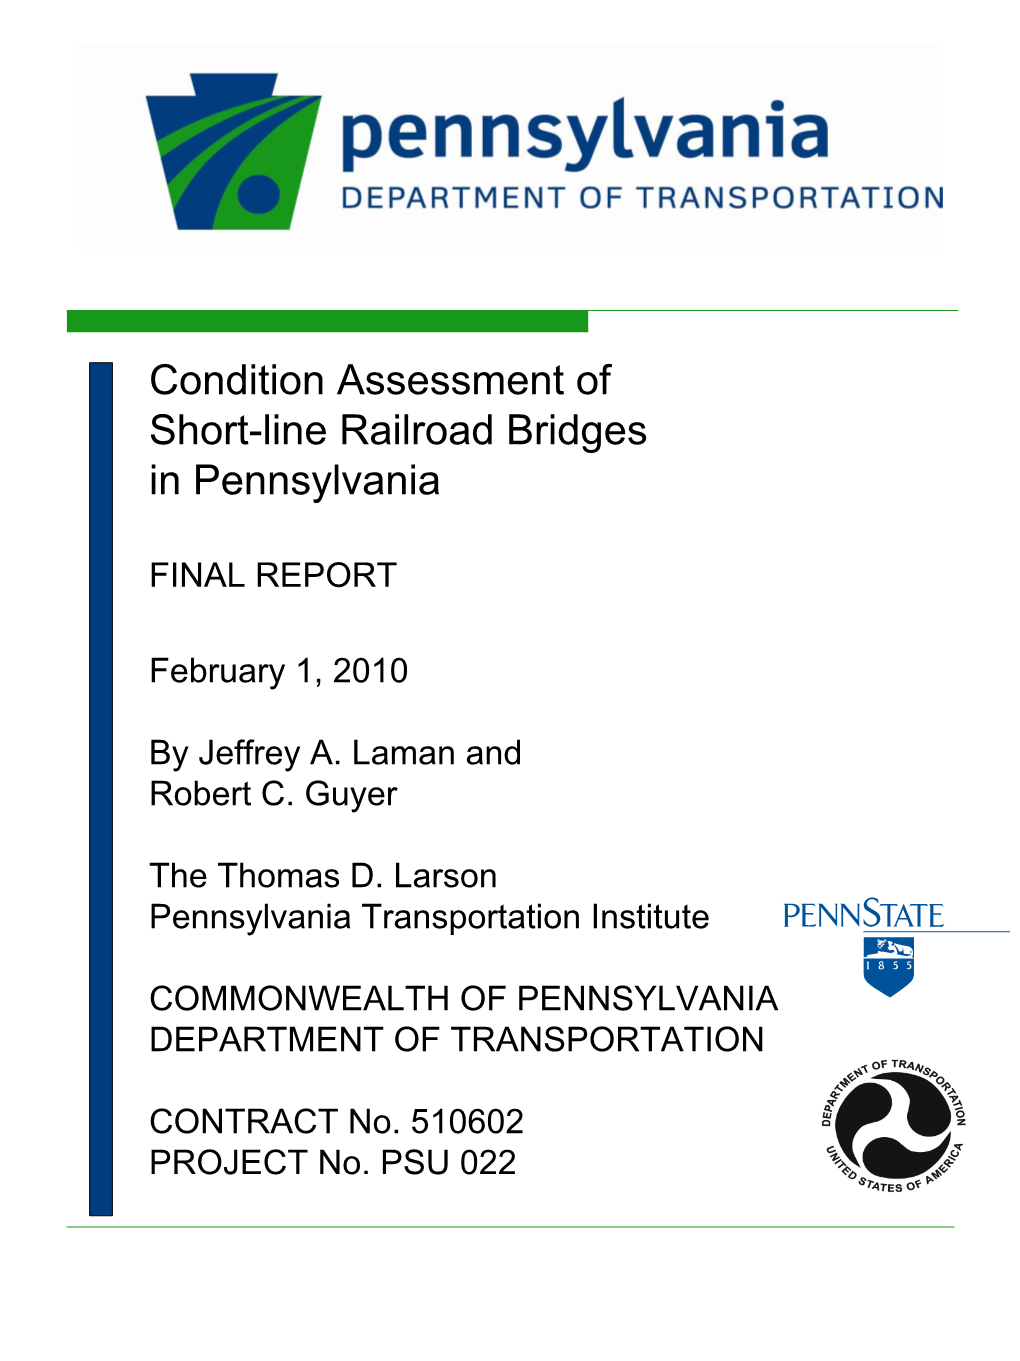 Condition Assessment of Short-Line Railroad Bridges in Pennsylvania